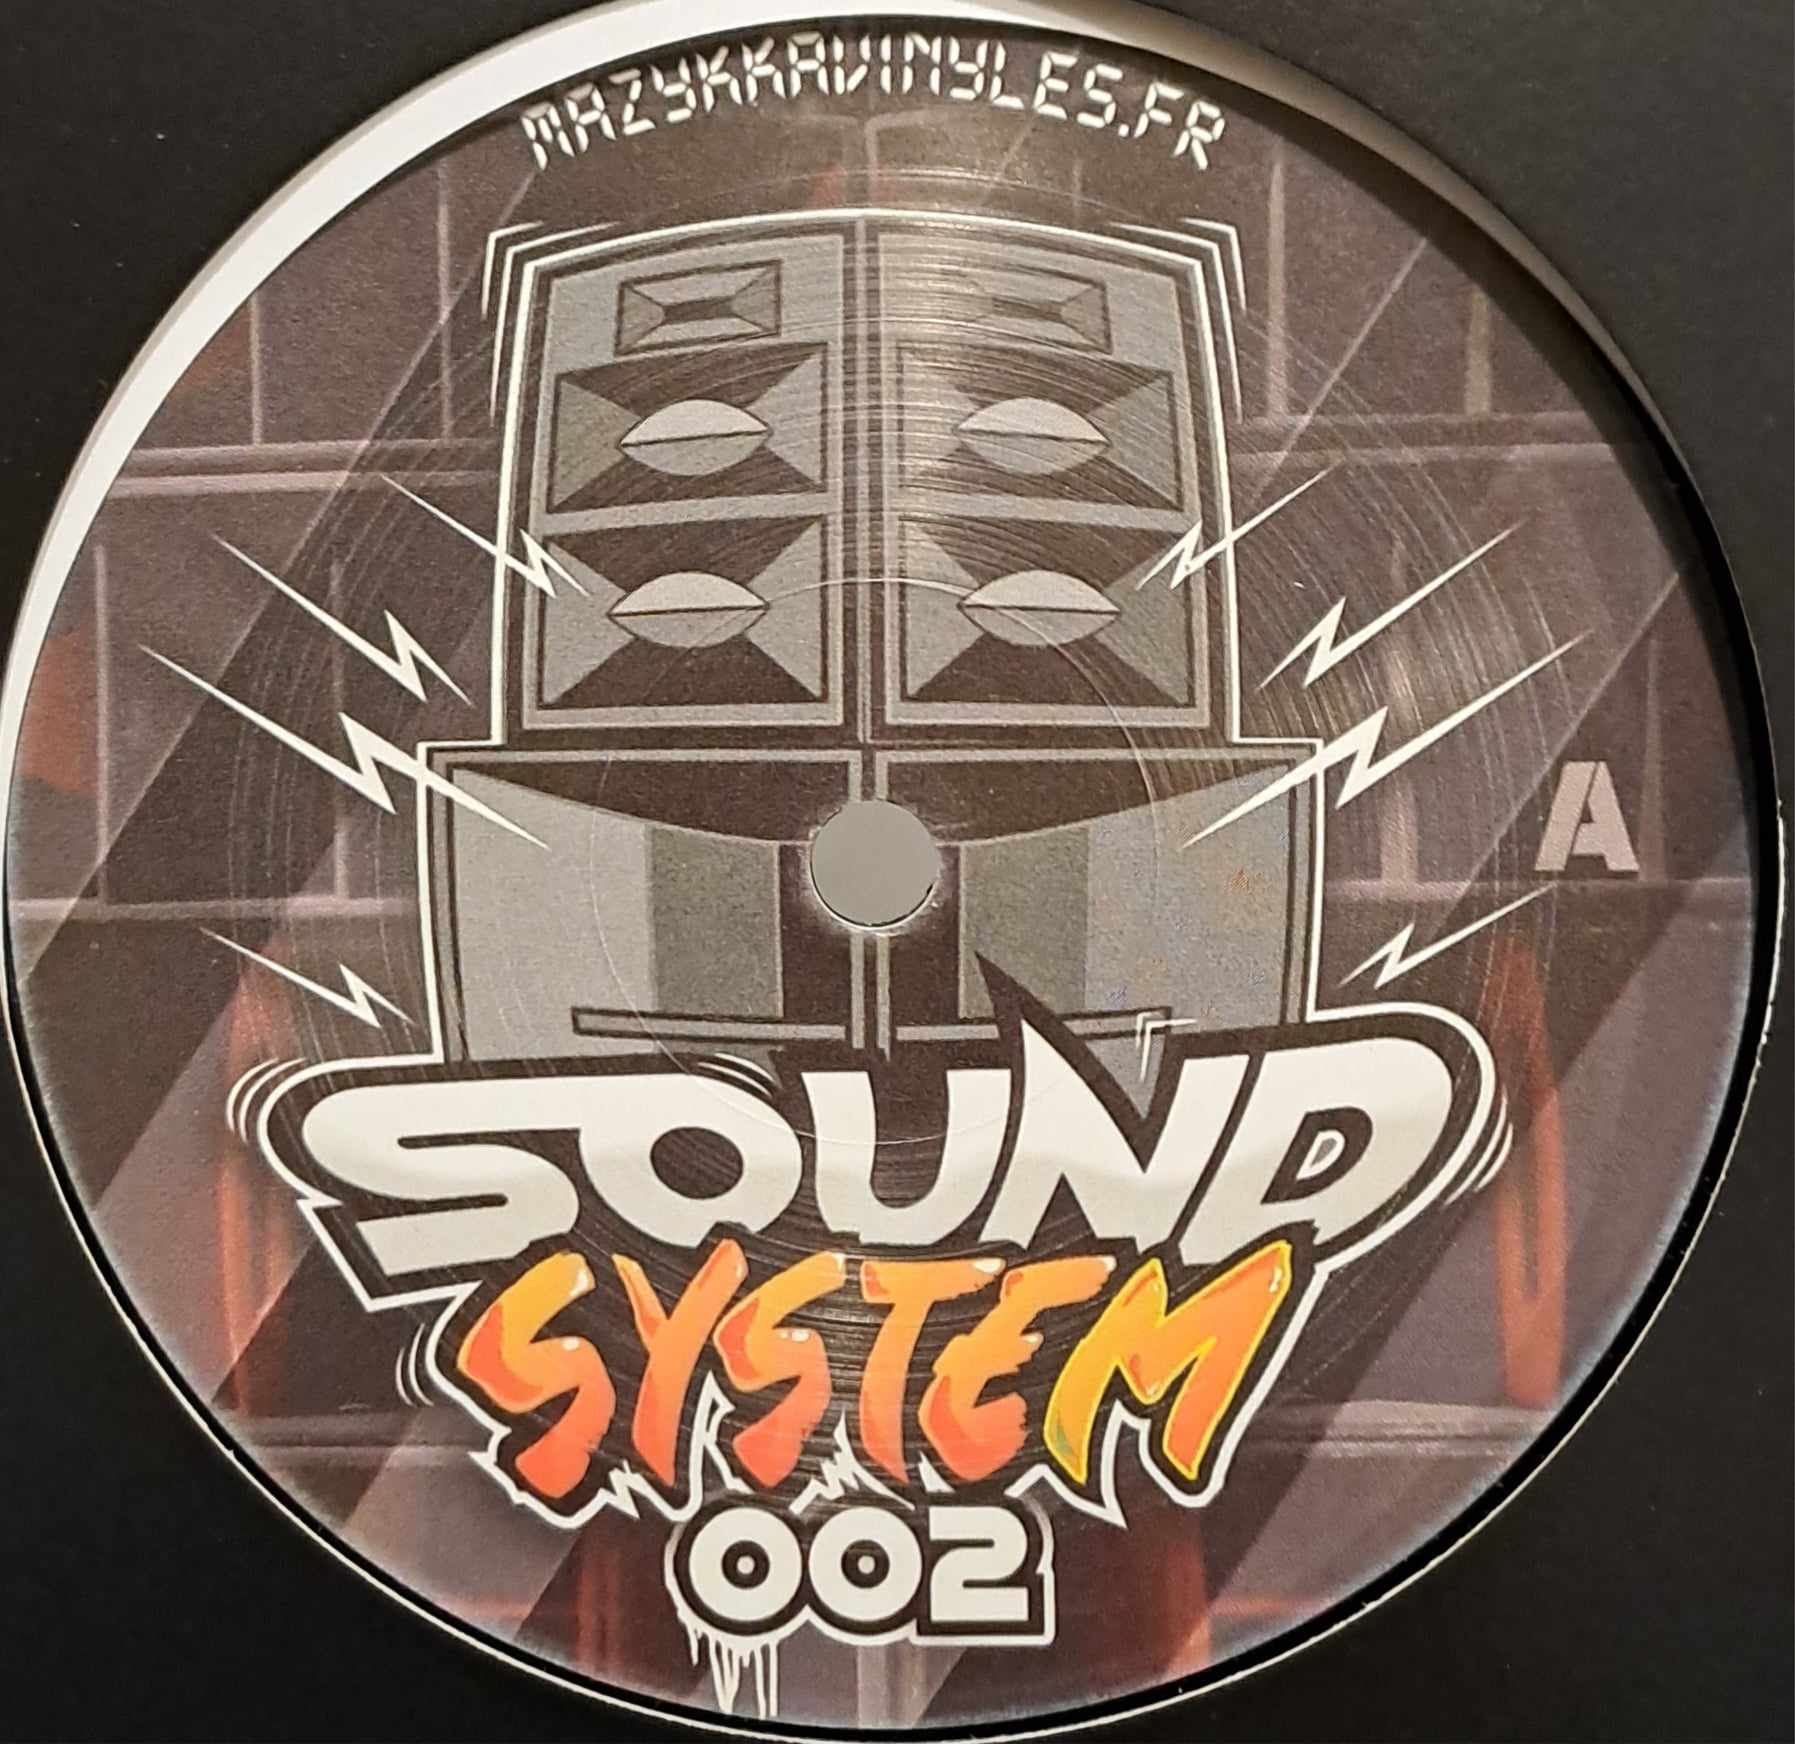 Sound System 002 - vinyle freetekno